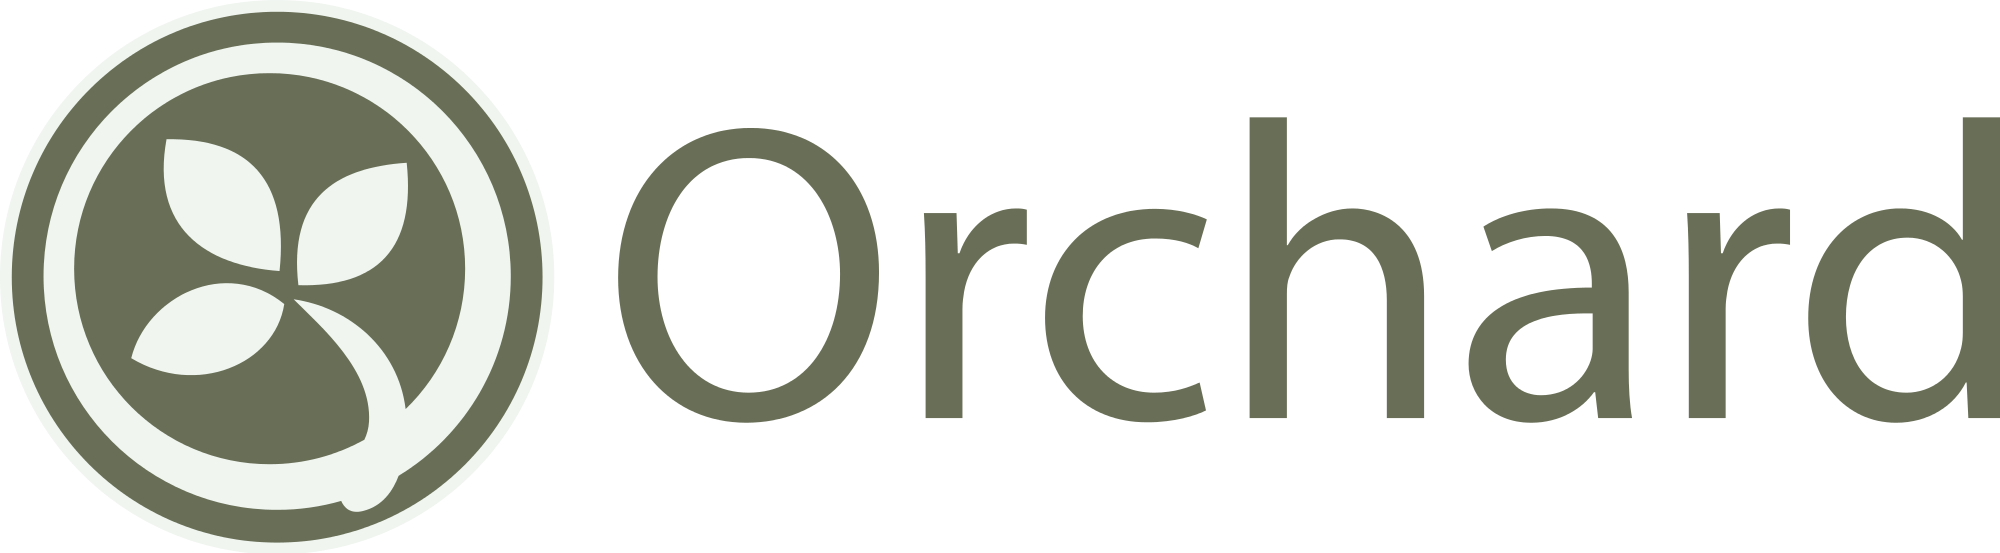 Orchard Logo - File:Orchard logo 1.svg - Wikimedia Commons